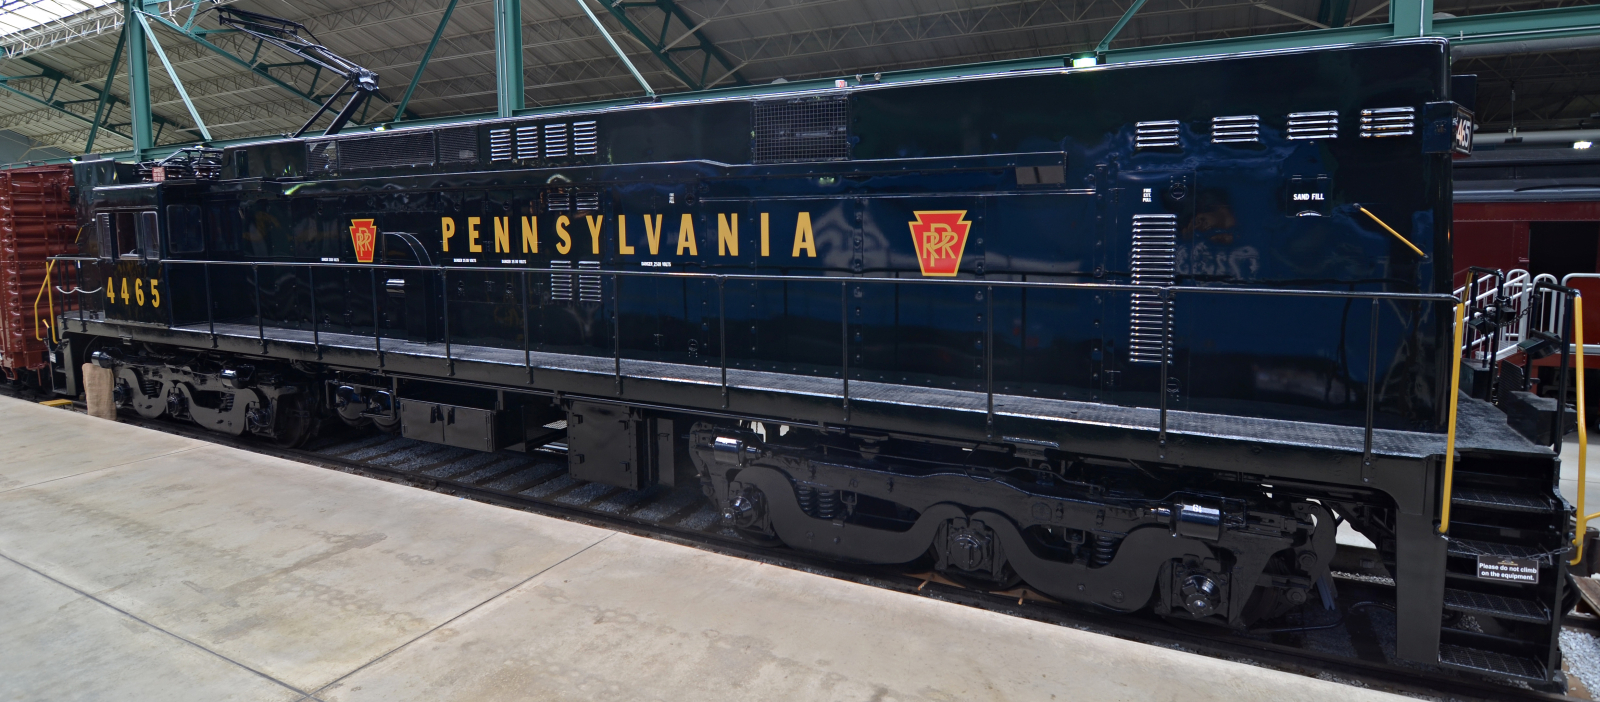 No. 4465 in the Railroad Museum of Pennsylvania, Strasburg